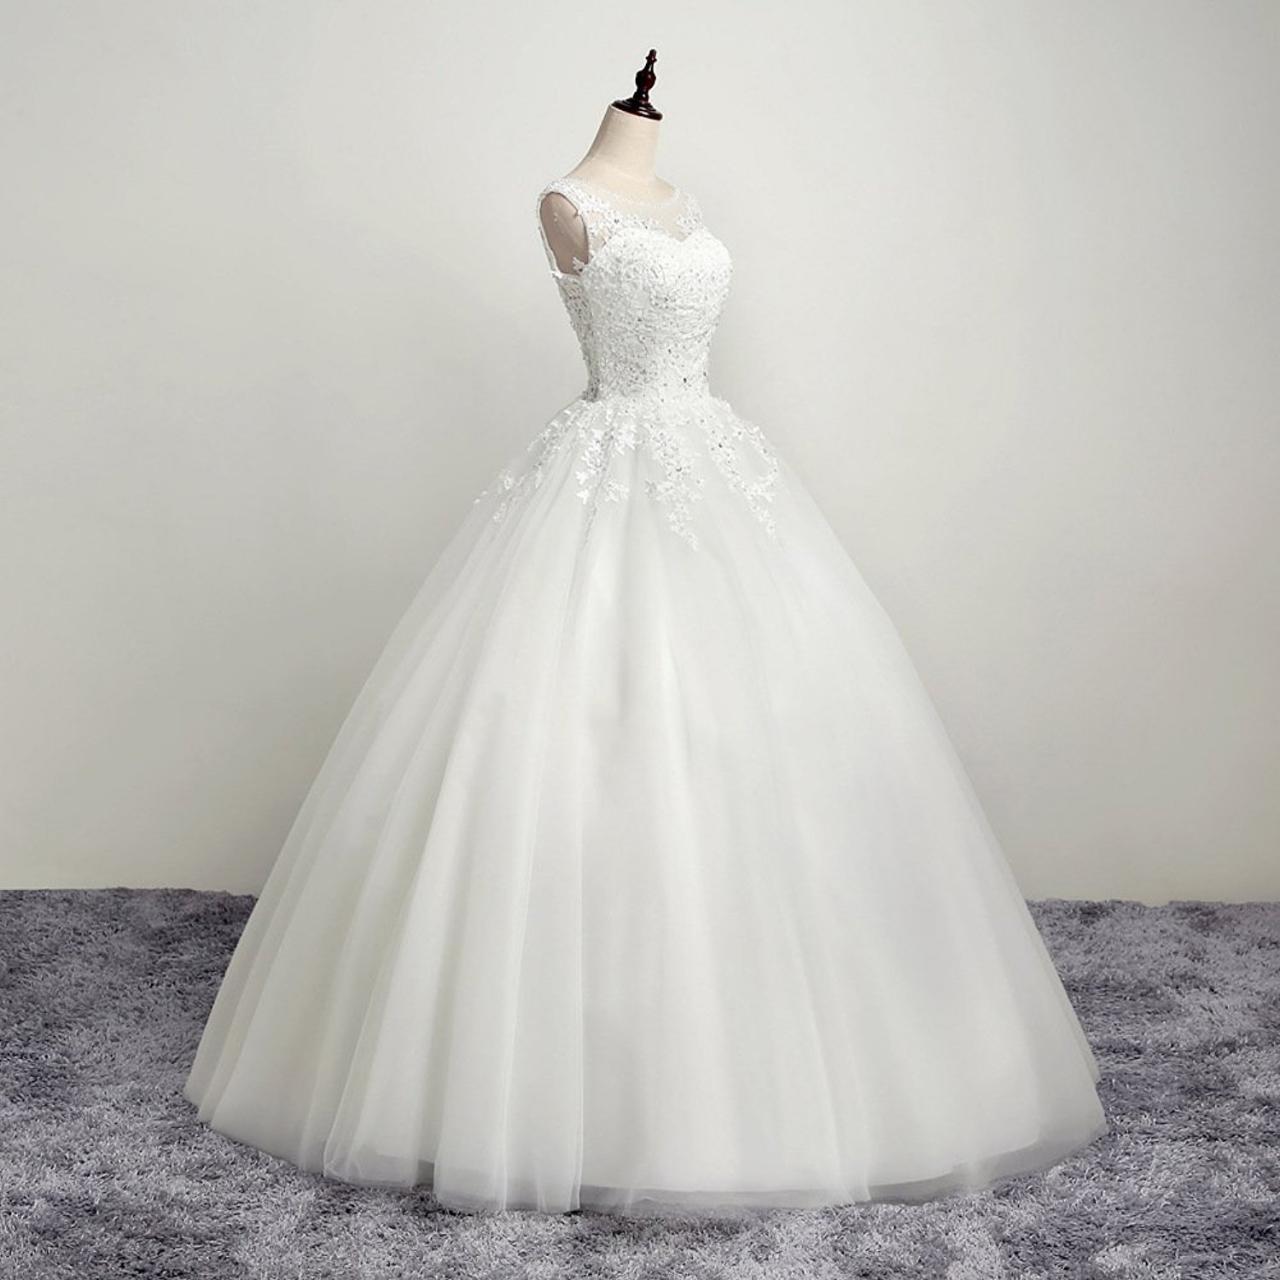 White Bridal Dress,sleeveless Prom Dress,lace Ball Gown Wedding Dress,handmade